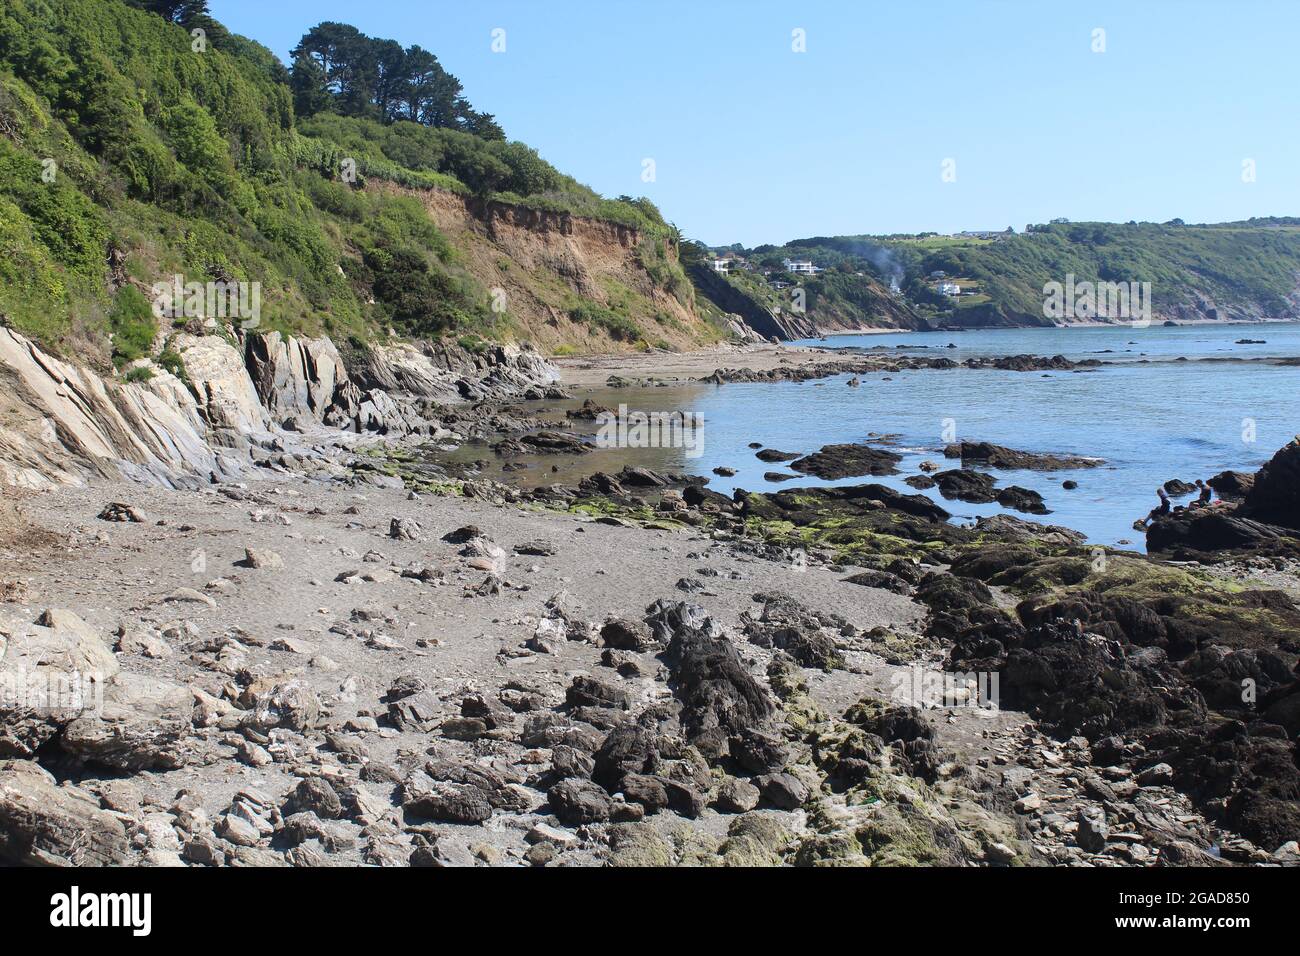 rocks gravel sand shell beach Stock Photo